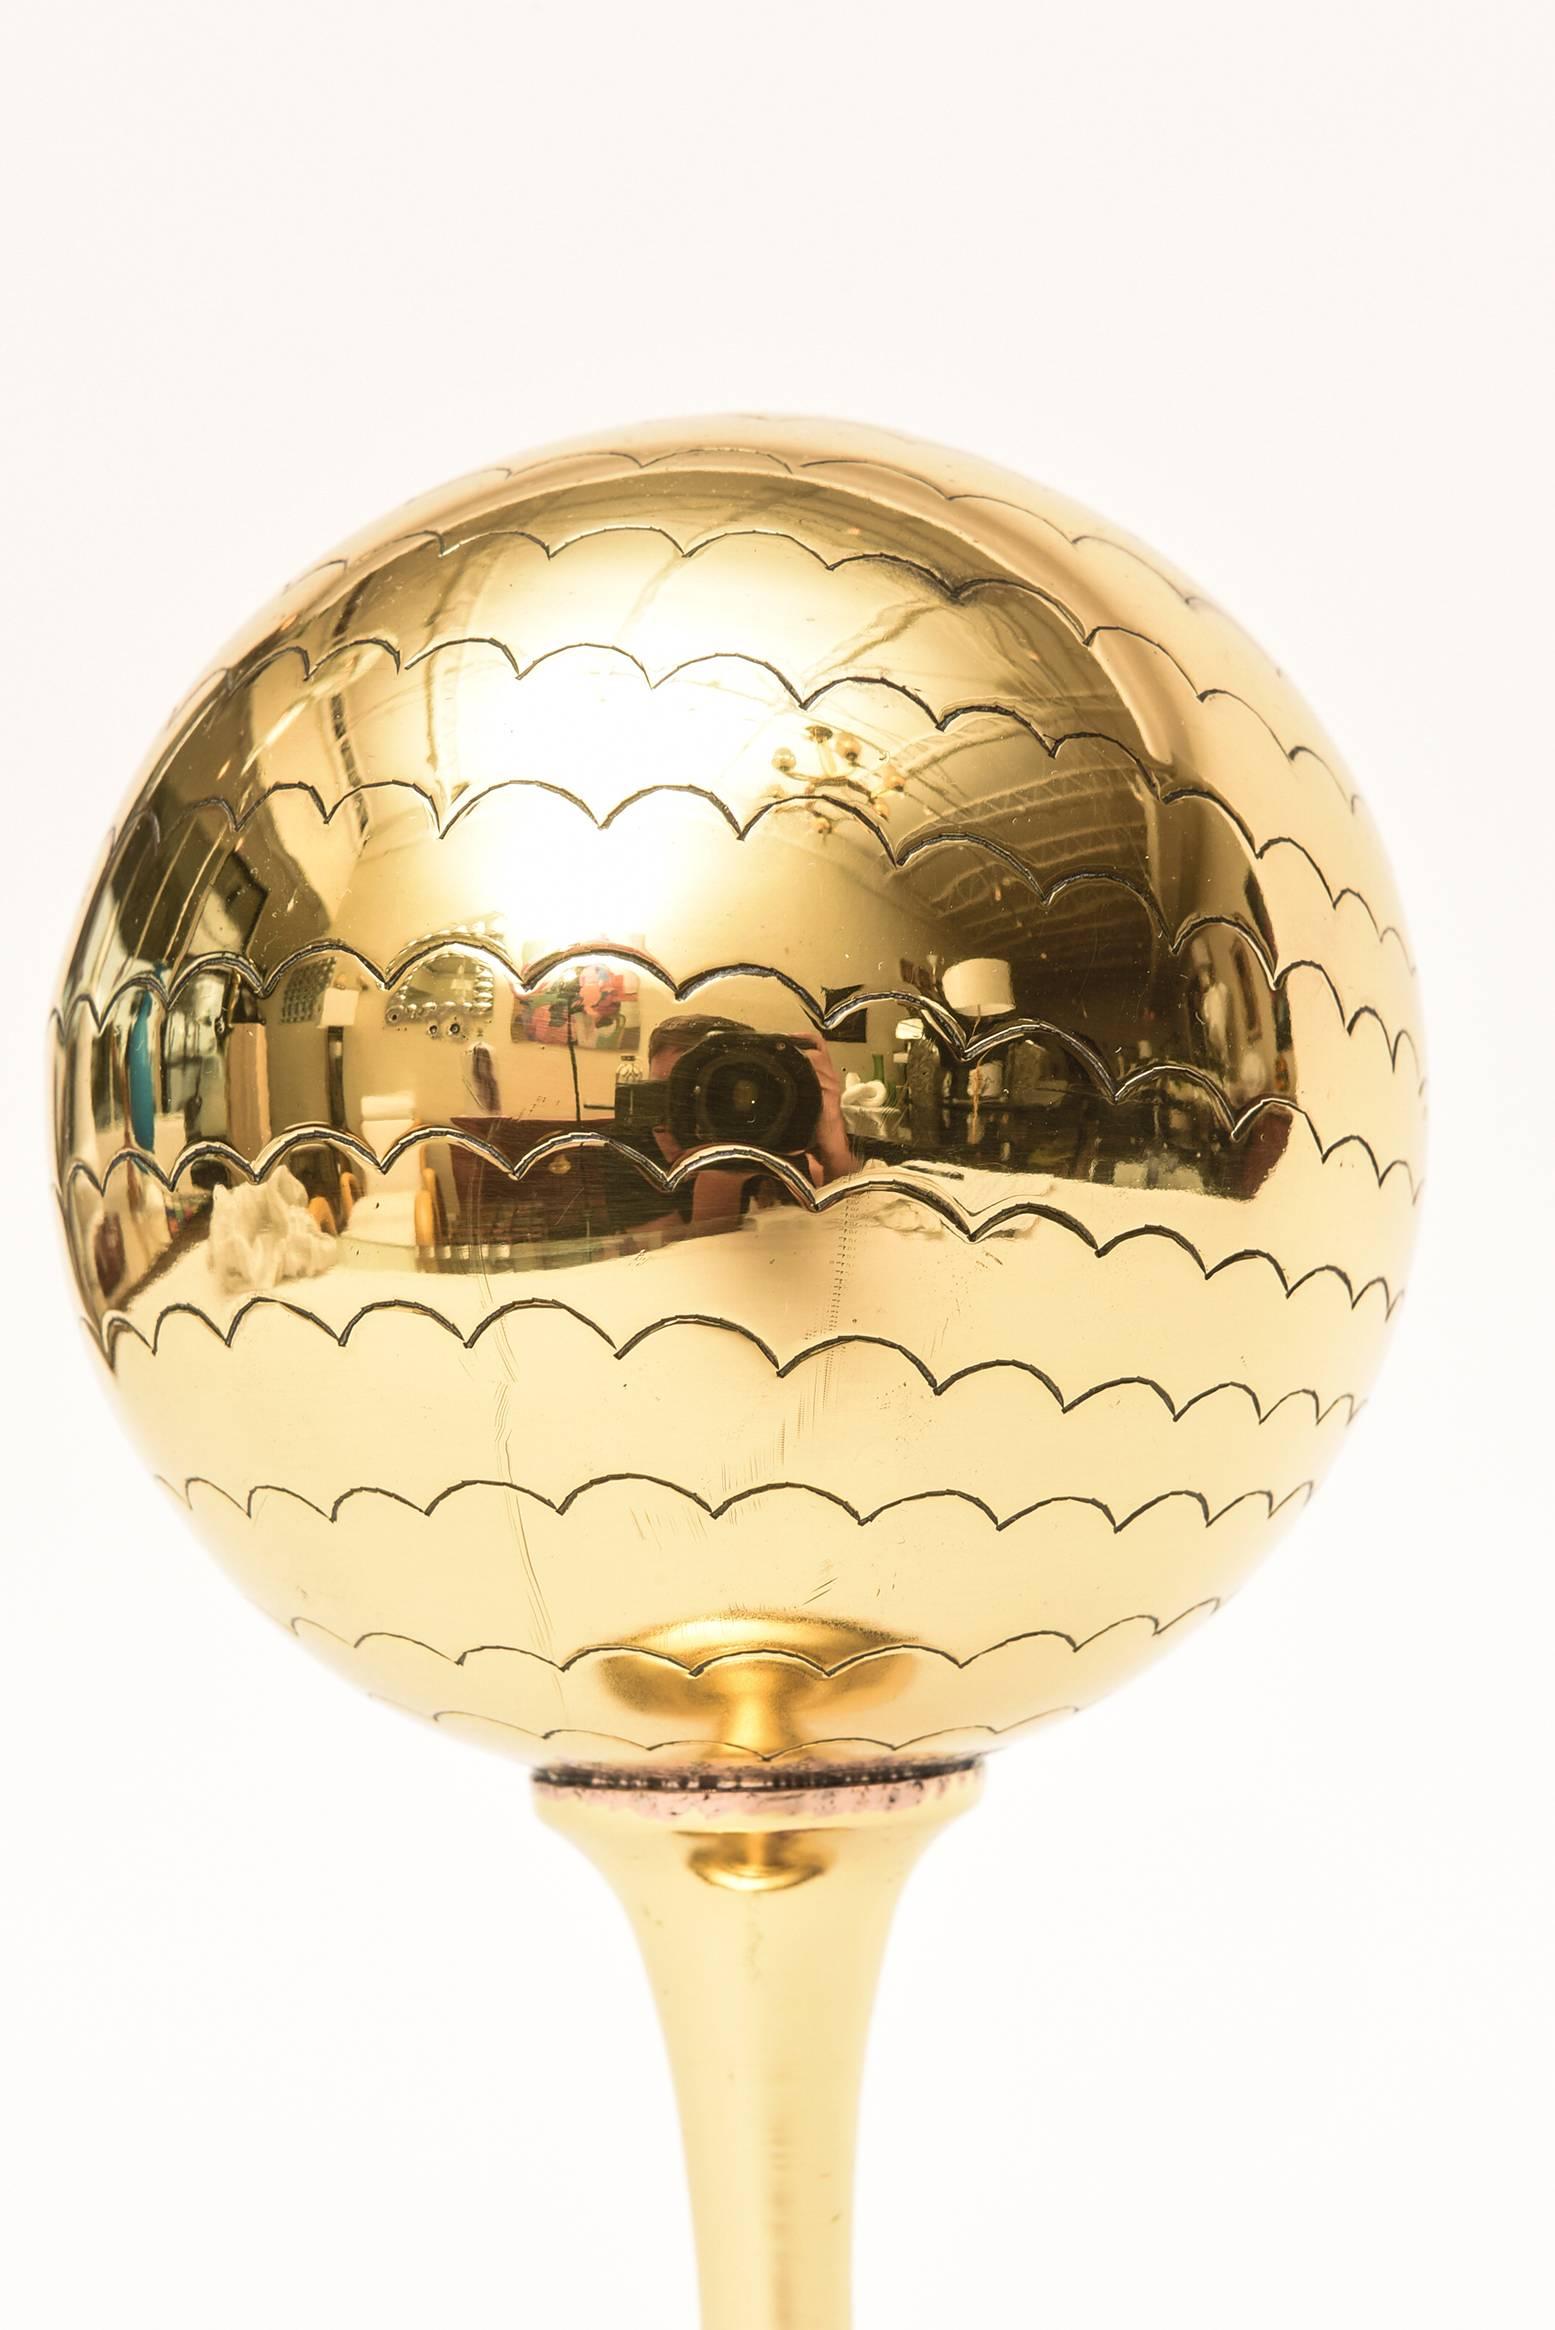 Brass Globe Sculpture or Object Mid-Century Modern Desk Accessory 1